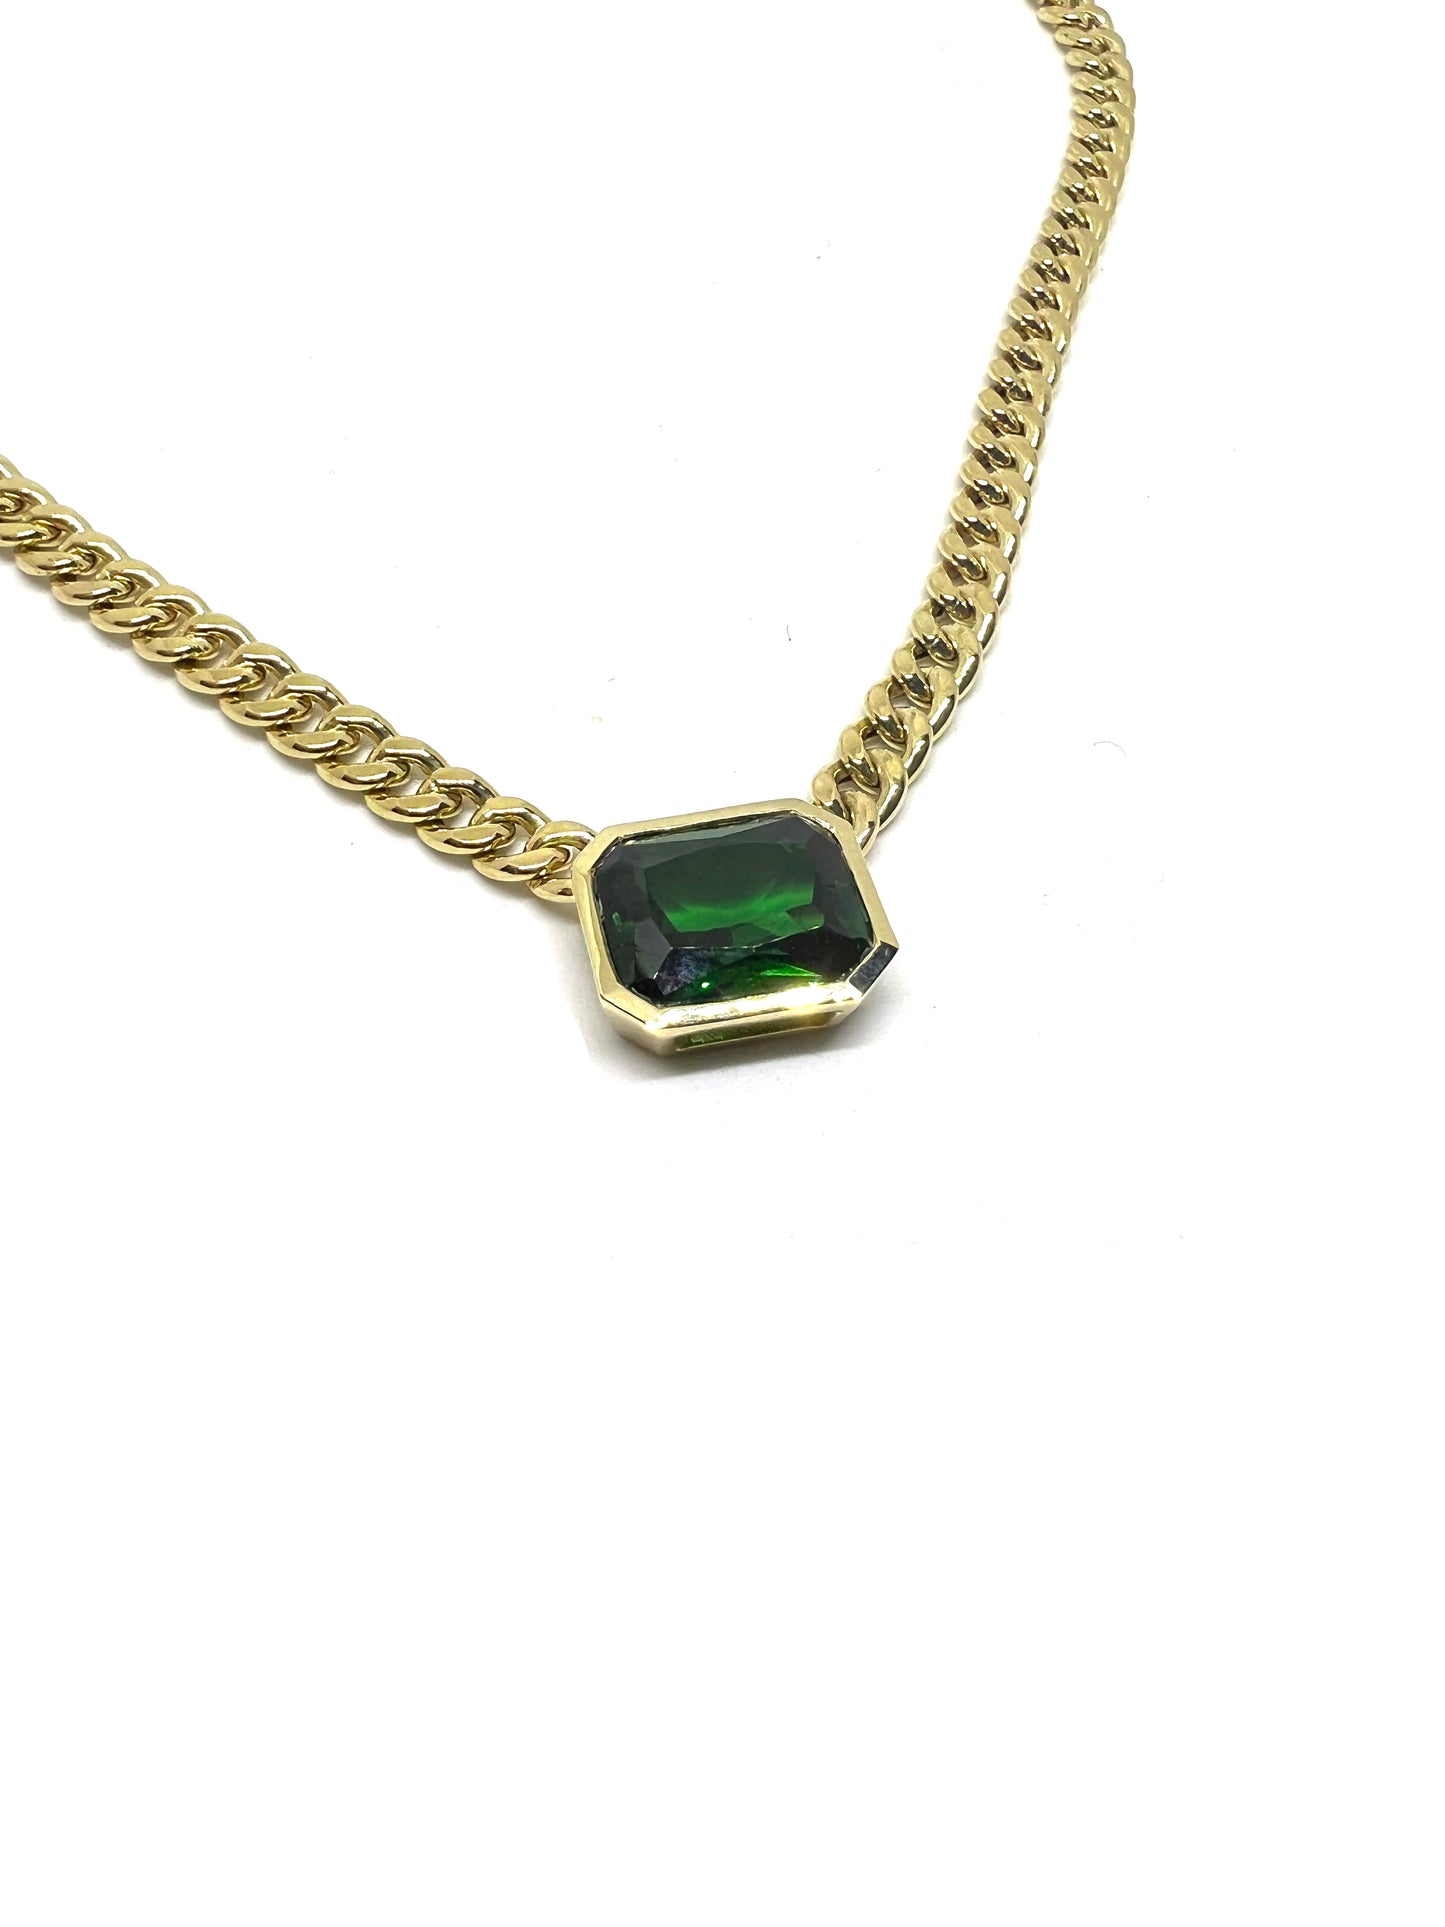 emerald stone curb chain necklace